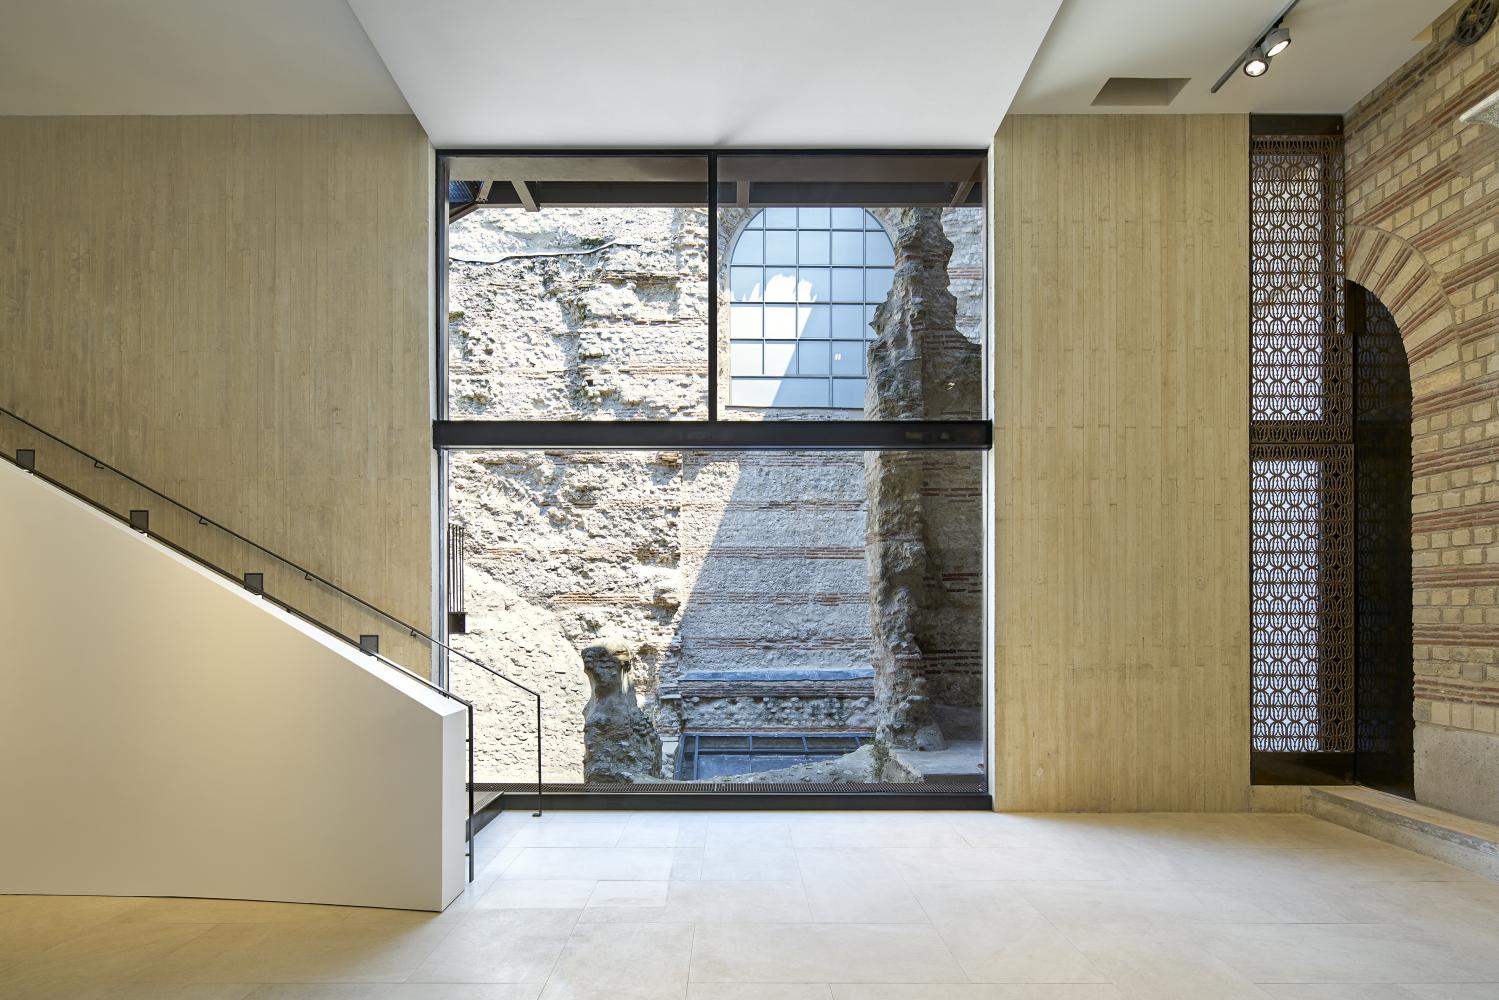   Das neue Empfangsgebäude des Cluny-Museums: Erdgeschoss und Treppenhaus